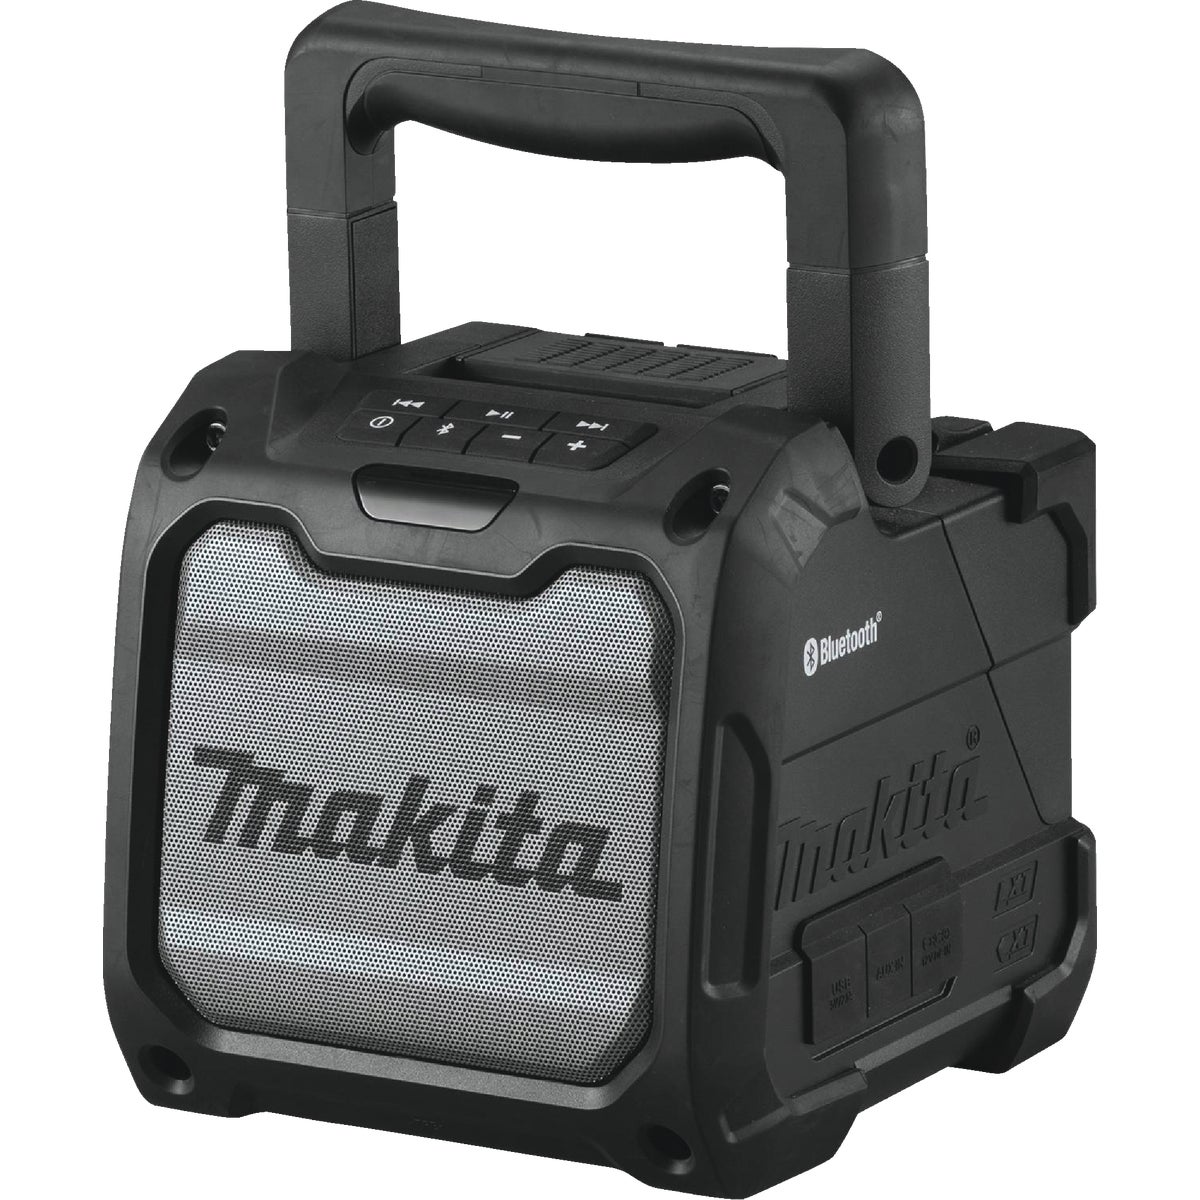 Makita 18 Volt LXT/12 Volt Max CXT Lithium-Ion Cordless Bluetooth Speaker (Tool Only)